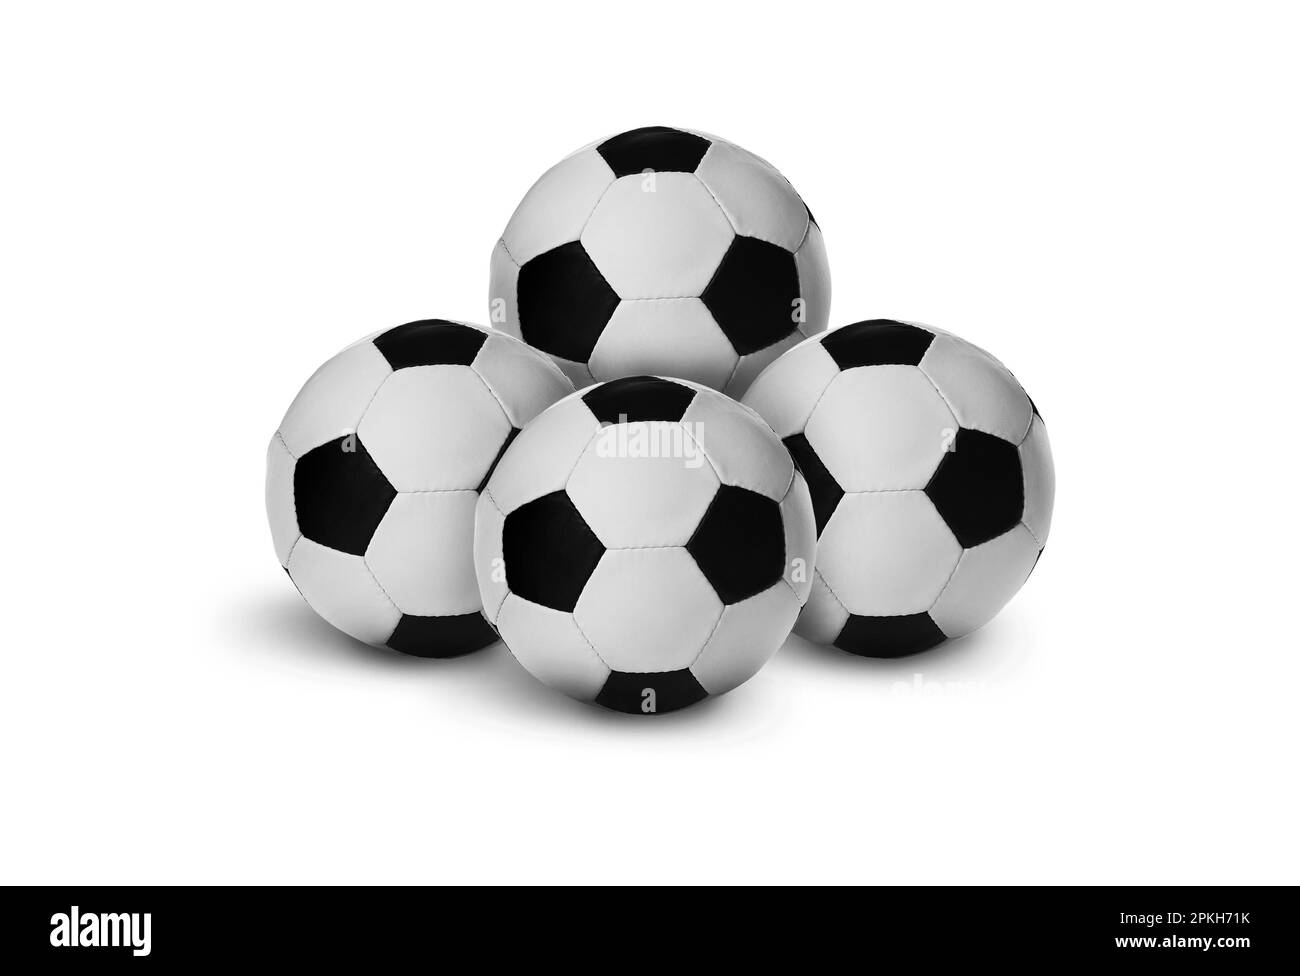 Many new soccer balls on white background Stock Photo